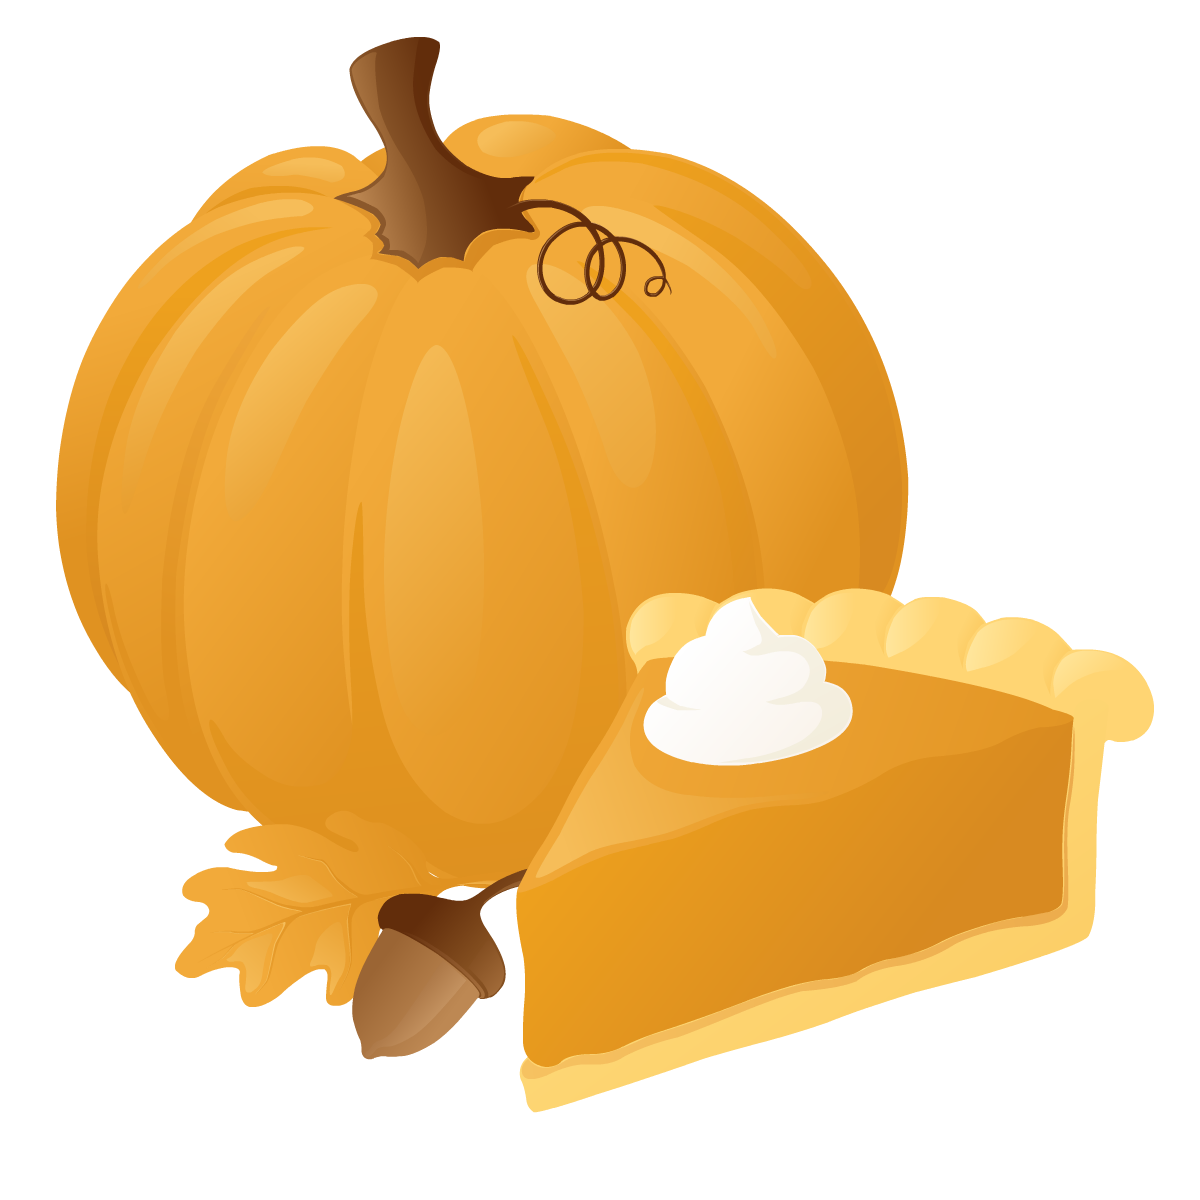 Free Pumpkin Pie Cliparts, Download Free Clip Art, Free Clip.